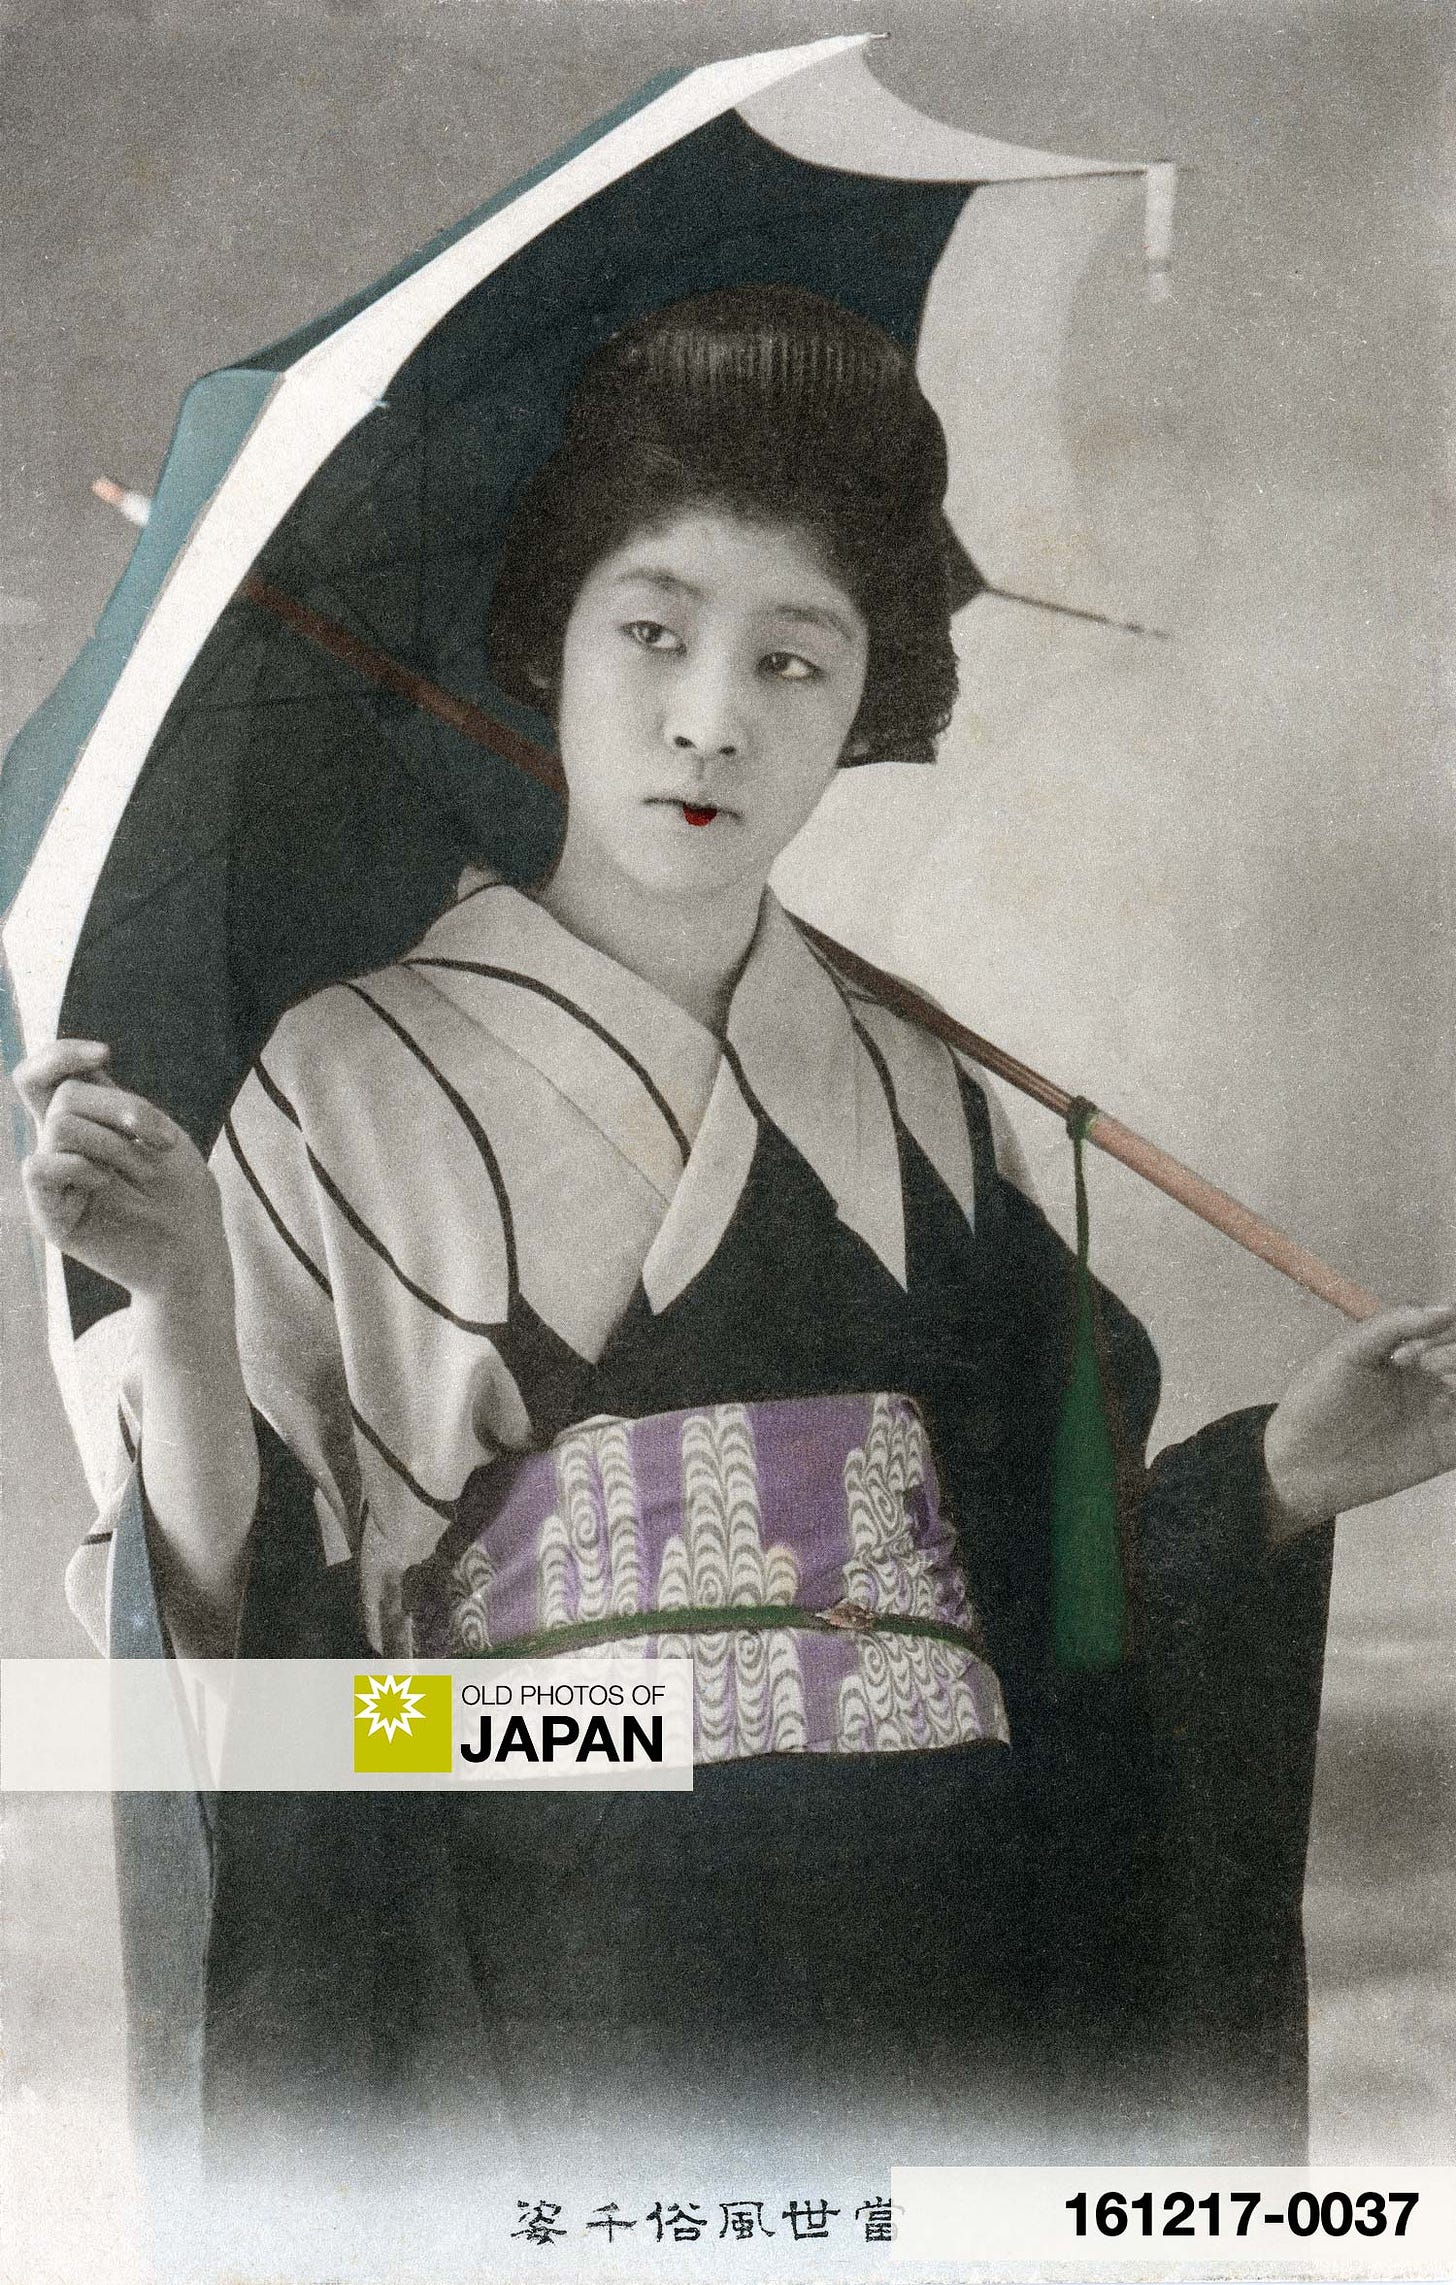 161217-0037 - Geisha with Umbrella, 1900s